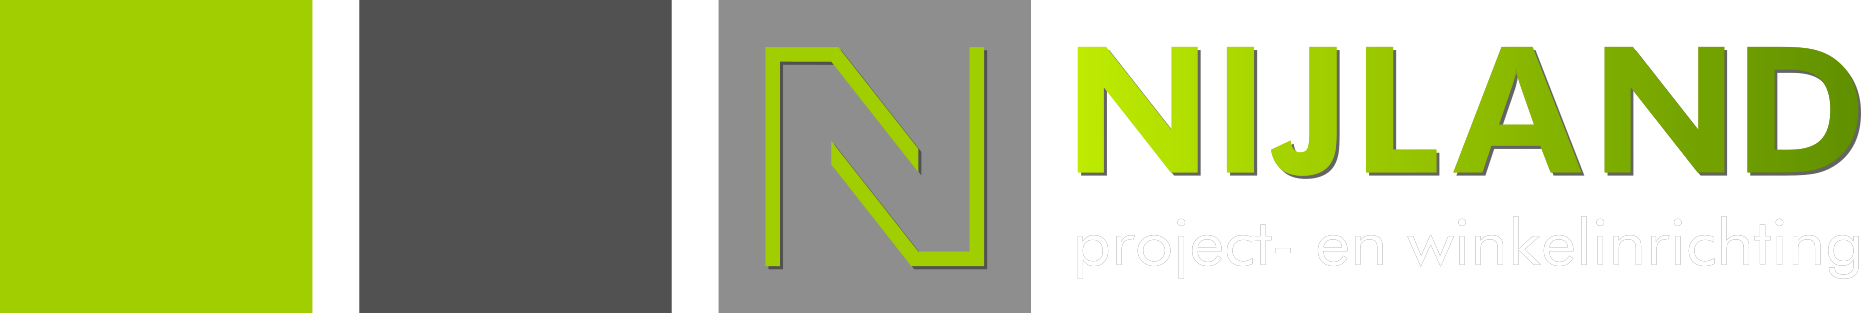 Njiland logo met wit